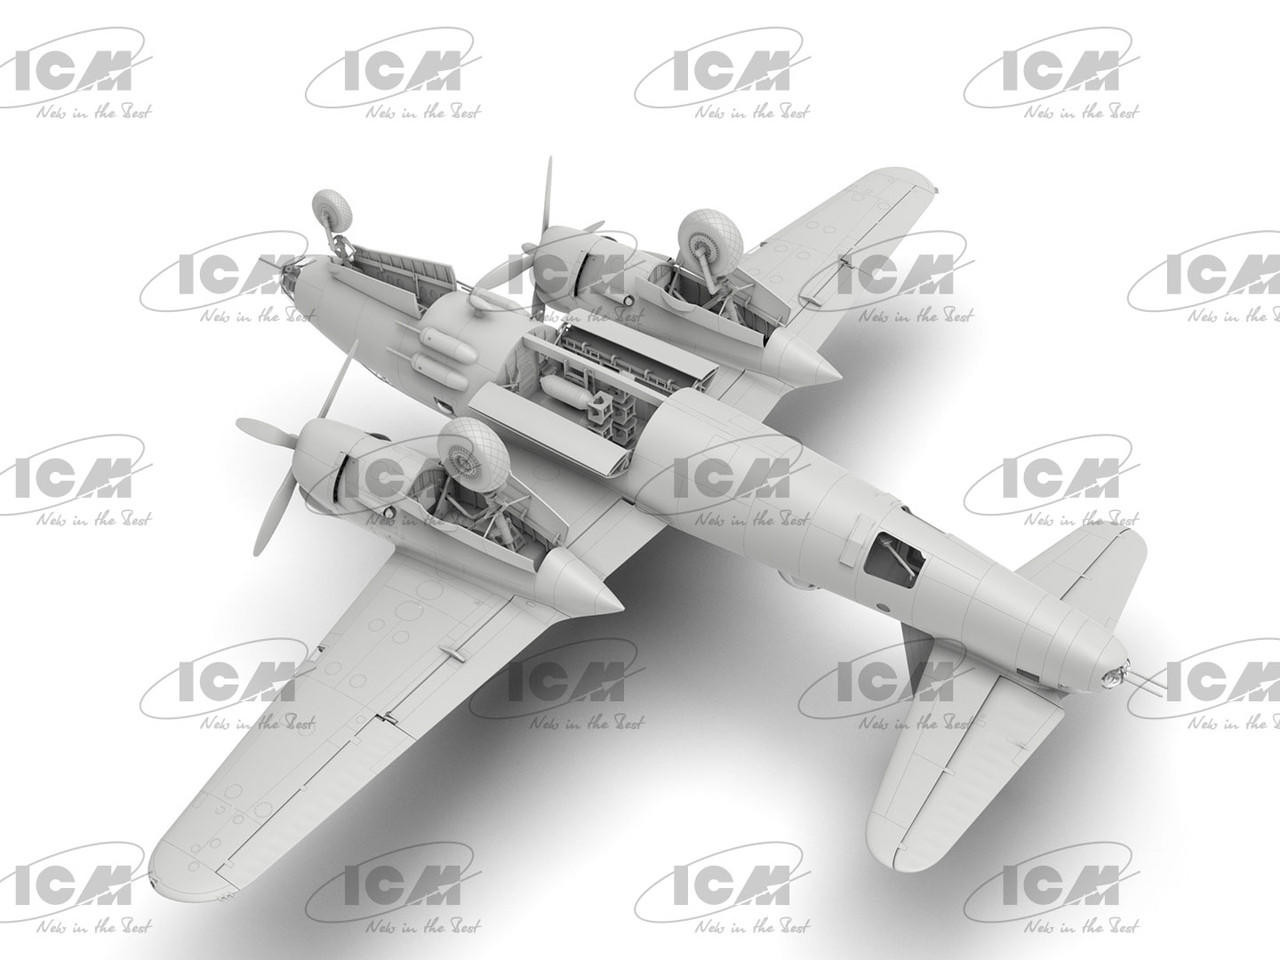 1/48 ICM B-26B Marauder WWII US Bomber Plastic Model Kit - Squadron.com